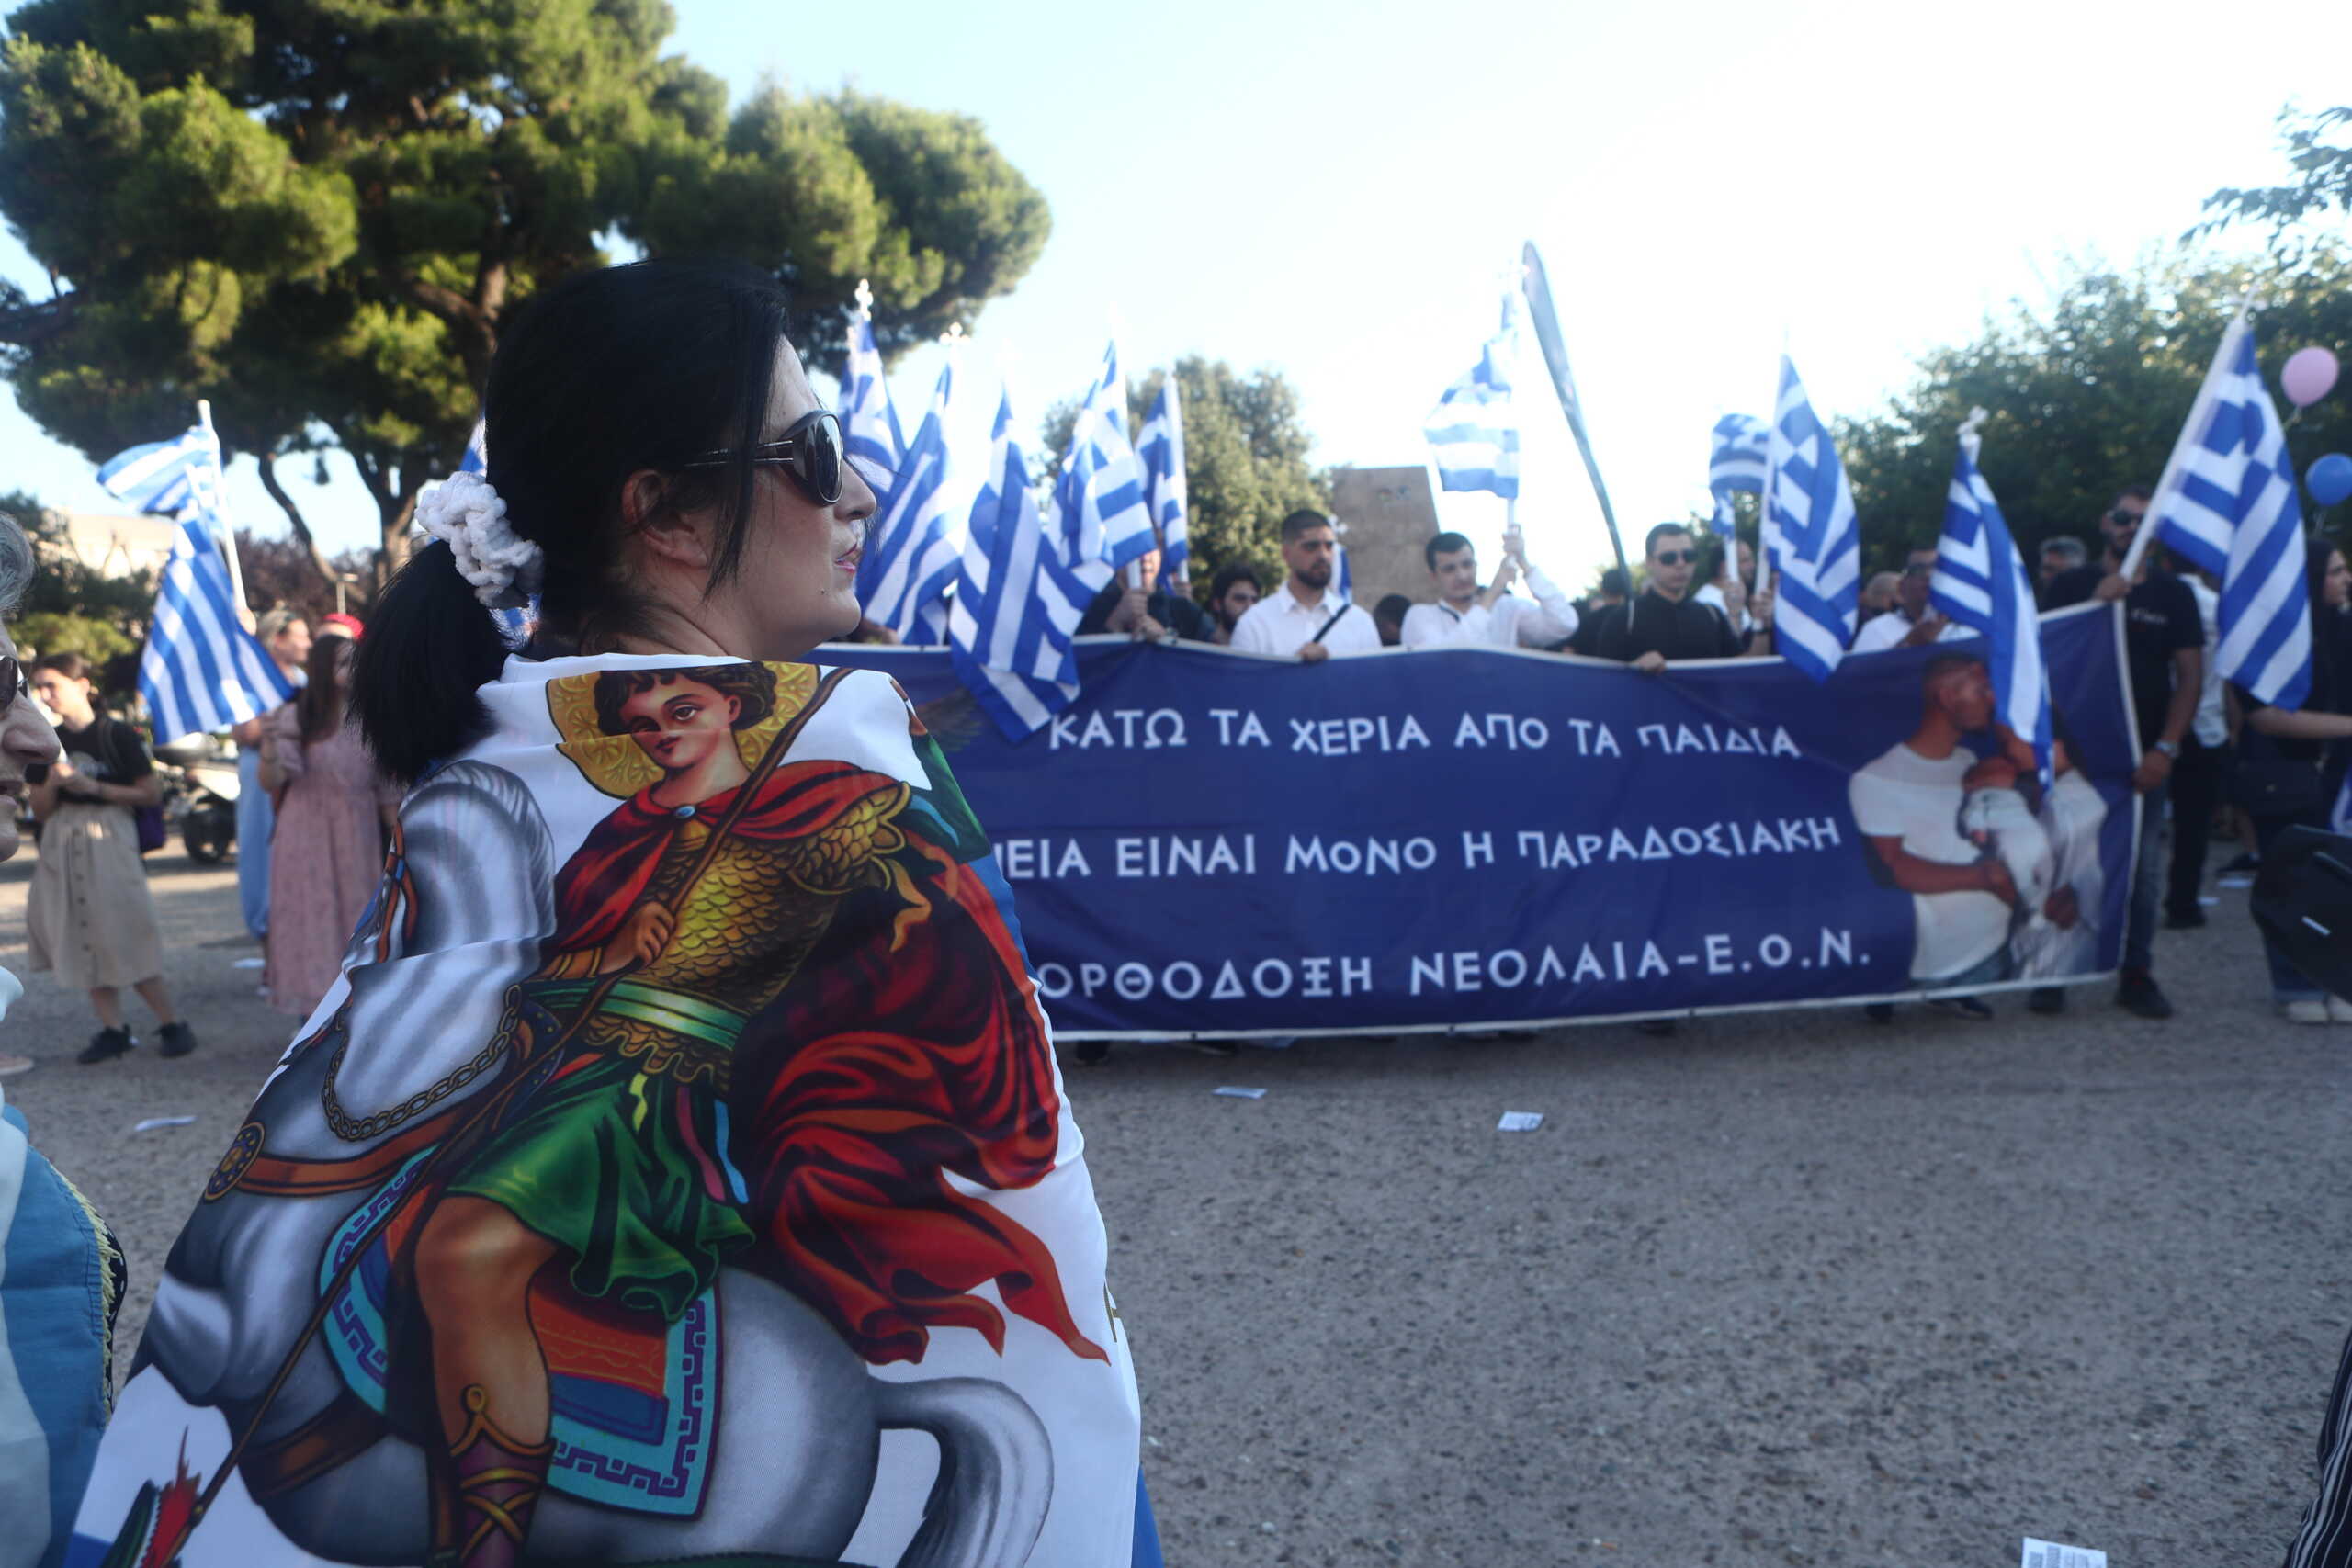 Family Pride στη Θεσσαλονίκη: Εικόνες από τη συγκέντρωση μπροστά στον Λευκό Πύργο